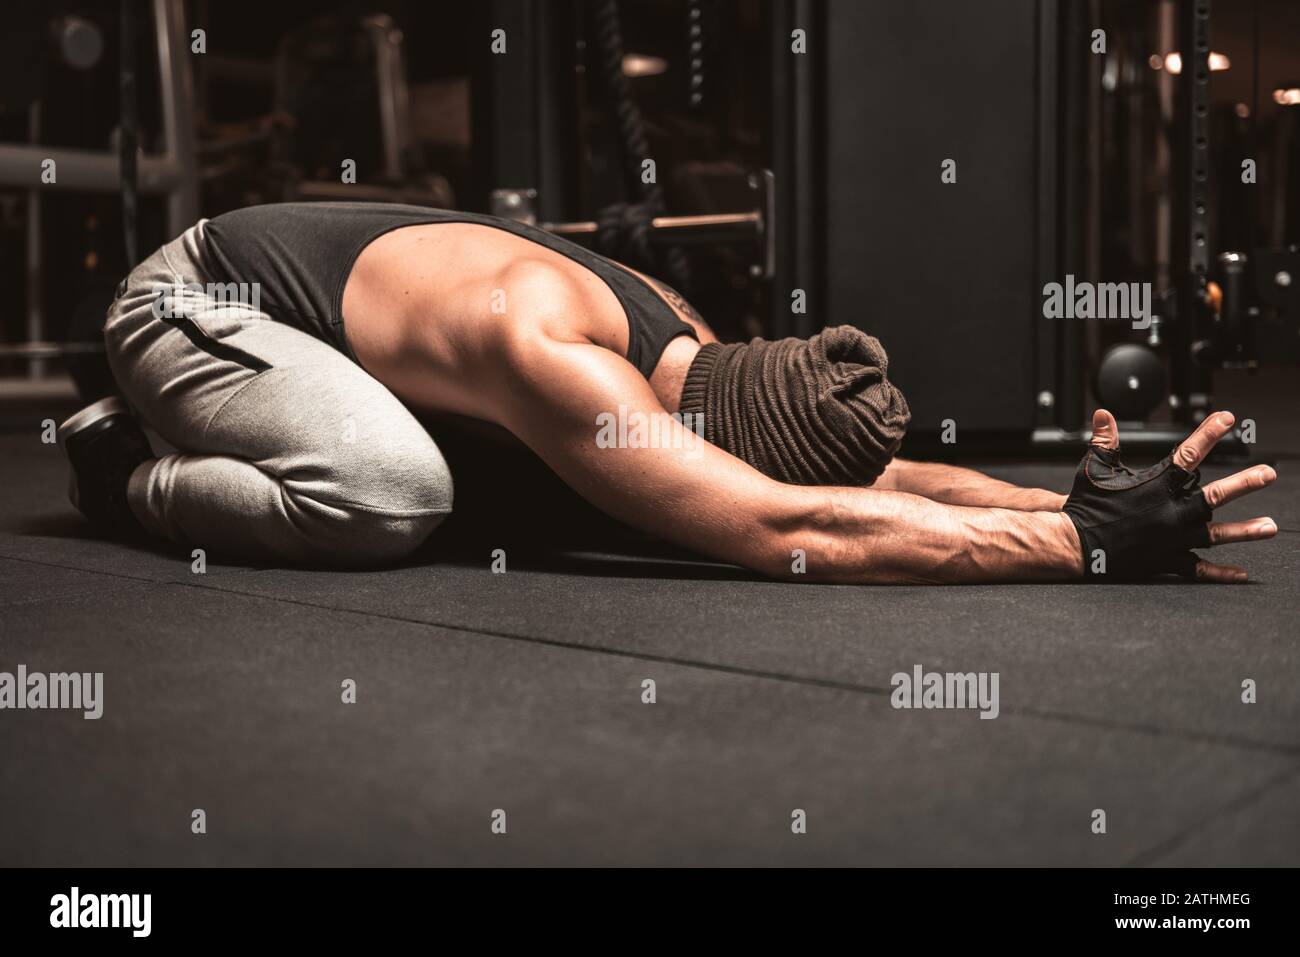 Male back muscular system anatomy in body-builder pose Stock Illustration |  Adobe Stock